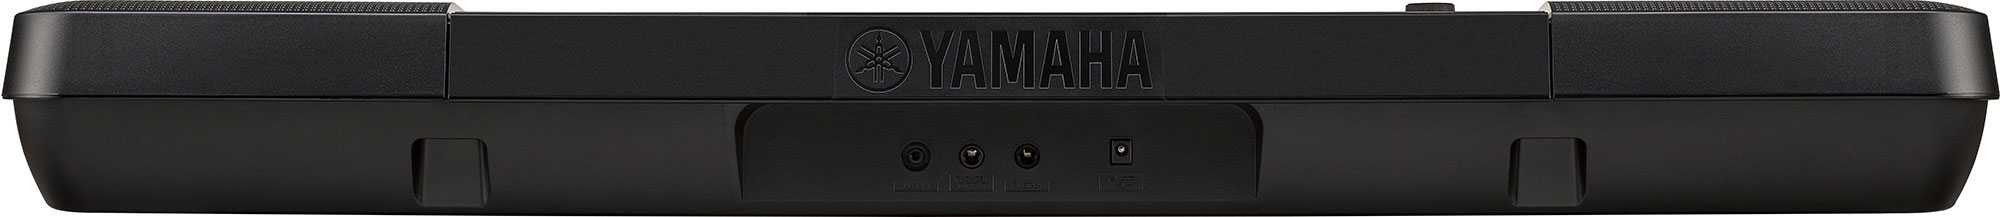 Yamaha Psr-e263 - - Entertainerkeyboard - Variation 2